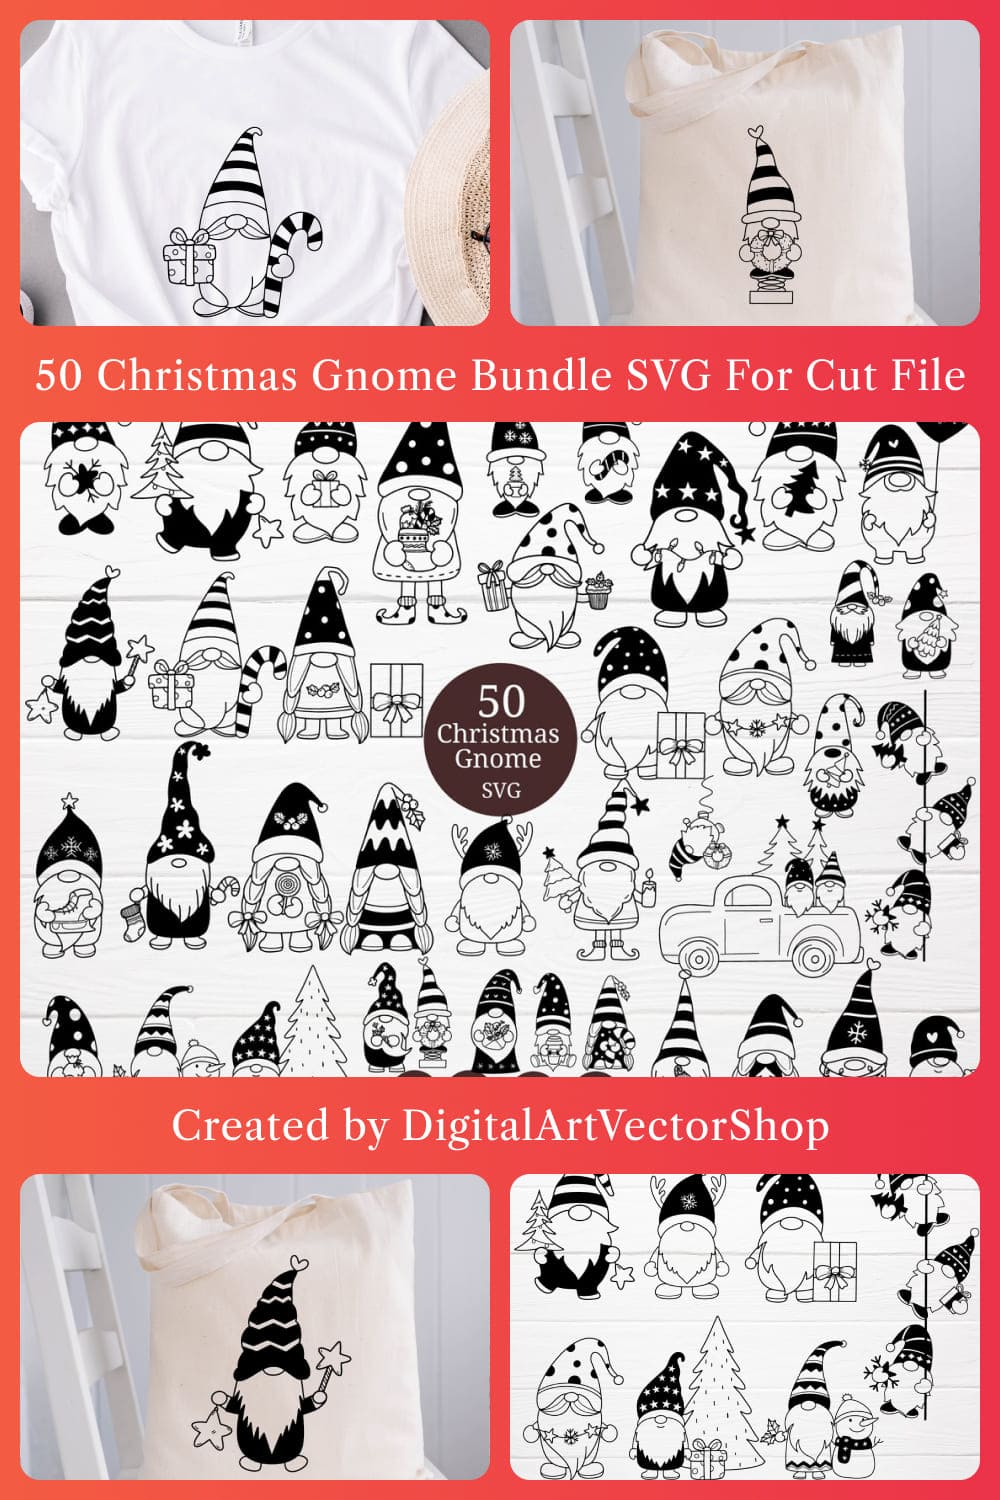 50 Christmas Gnome Bundle SVG For Cut File.